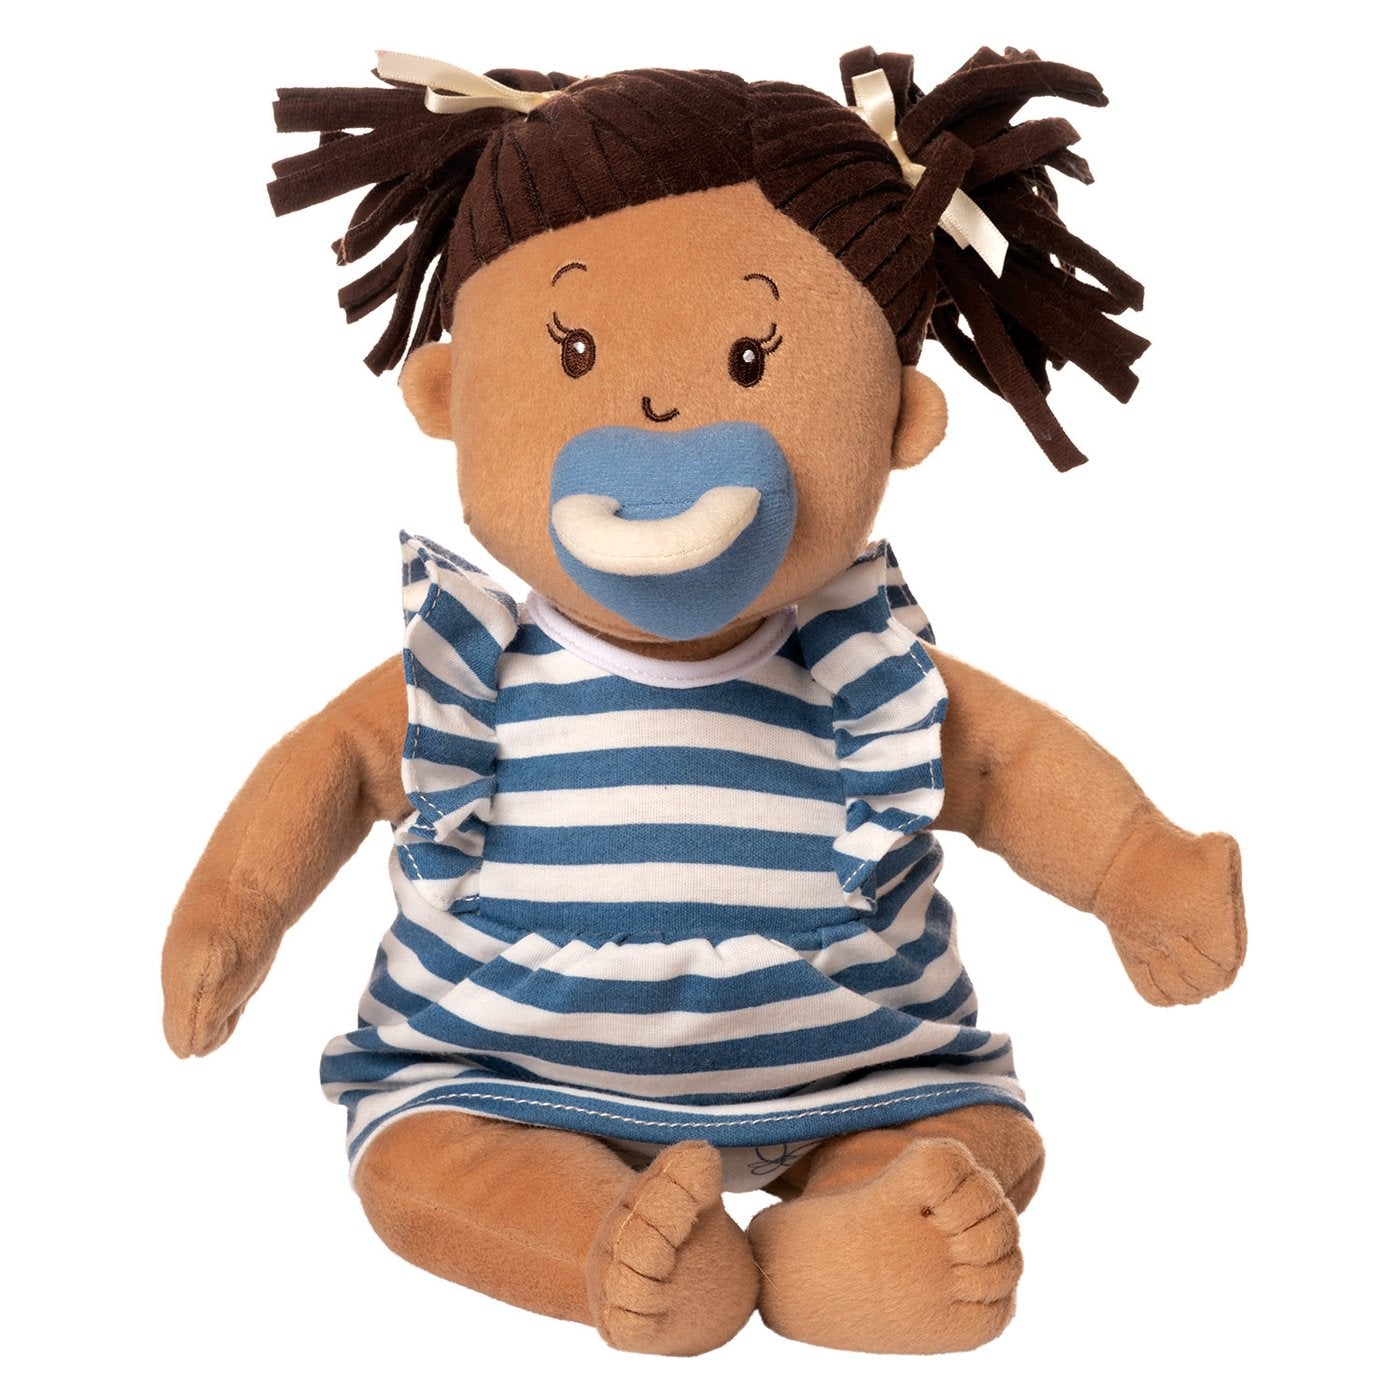 Manhattan Toy Baby Stella Beige Doll with Brown Hair Toy - ANB Baby -$20 - $50